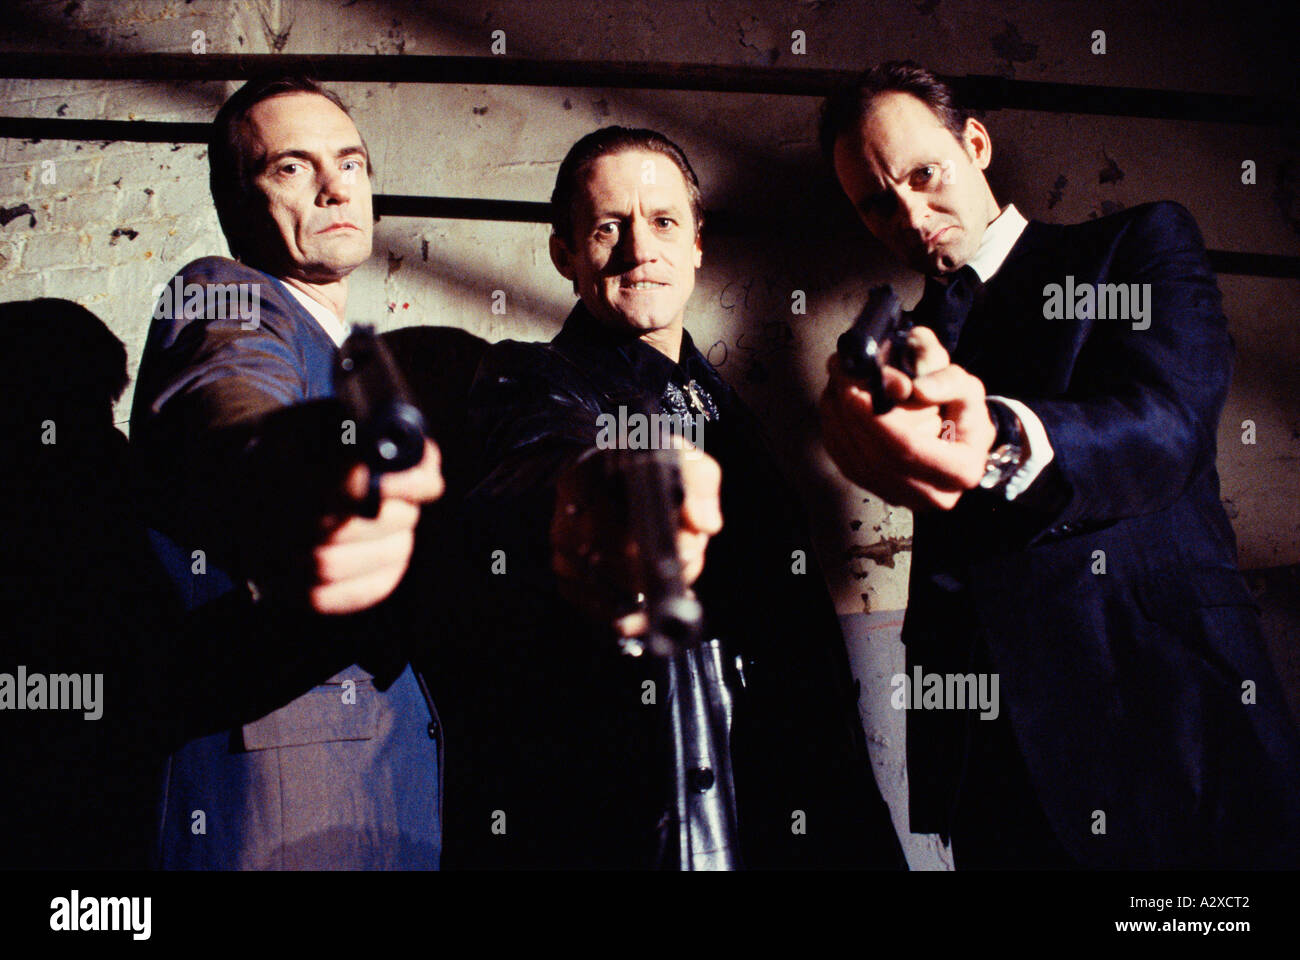 Concept.Three men aiming pistols. Stock Photo